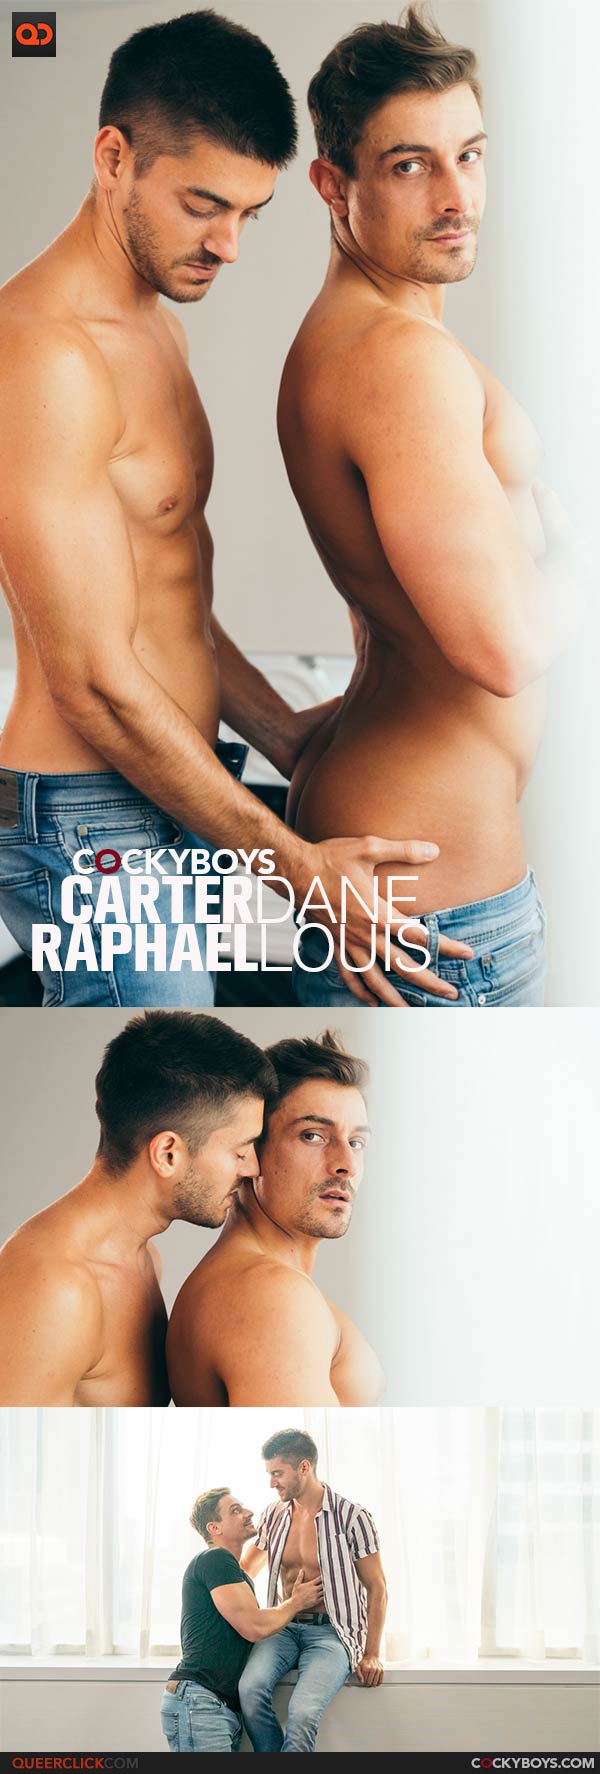 CockyBoys: Carter Dane and Raphael Louis